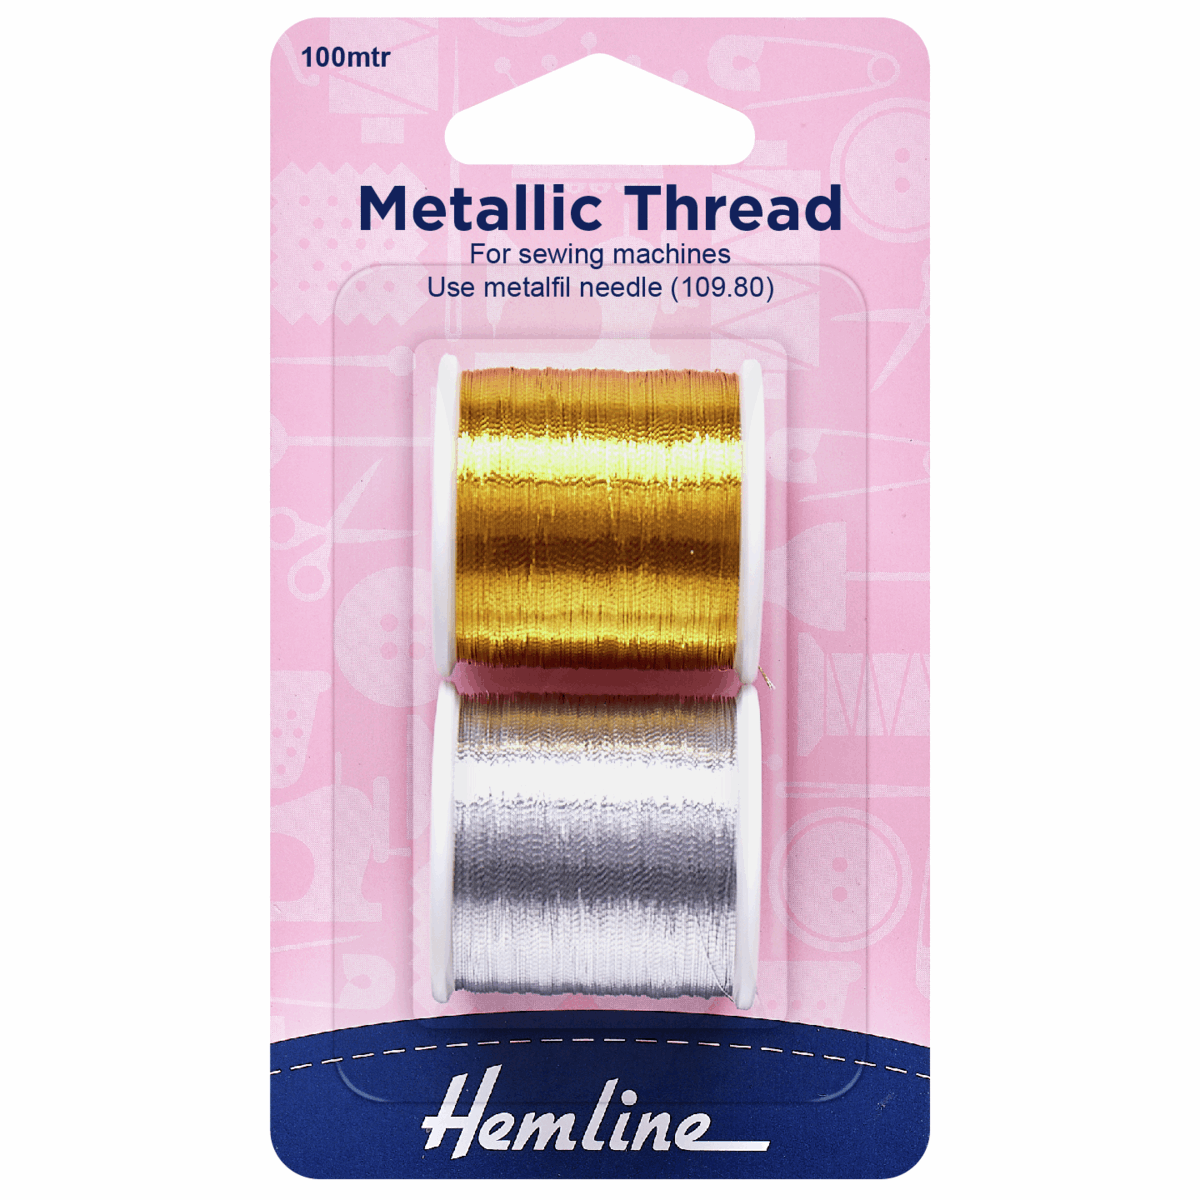 Metallic Thread - Twin Pack (HEMLINE)